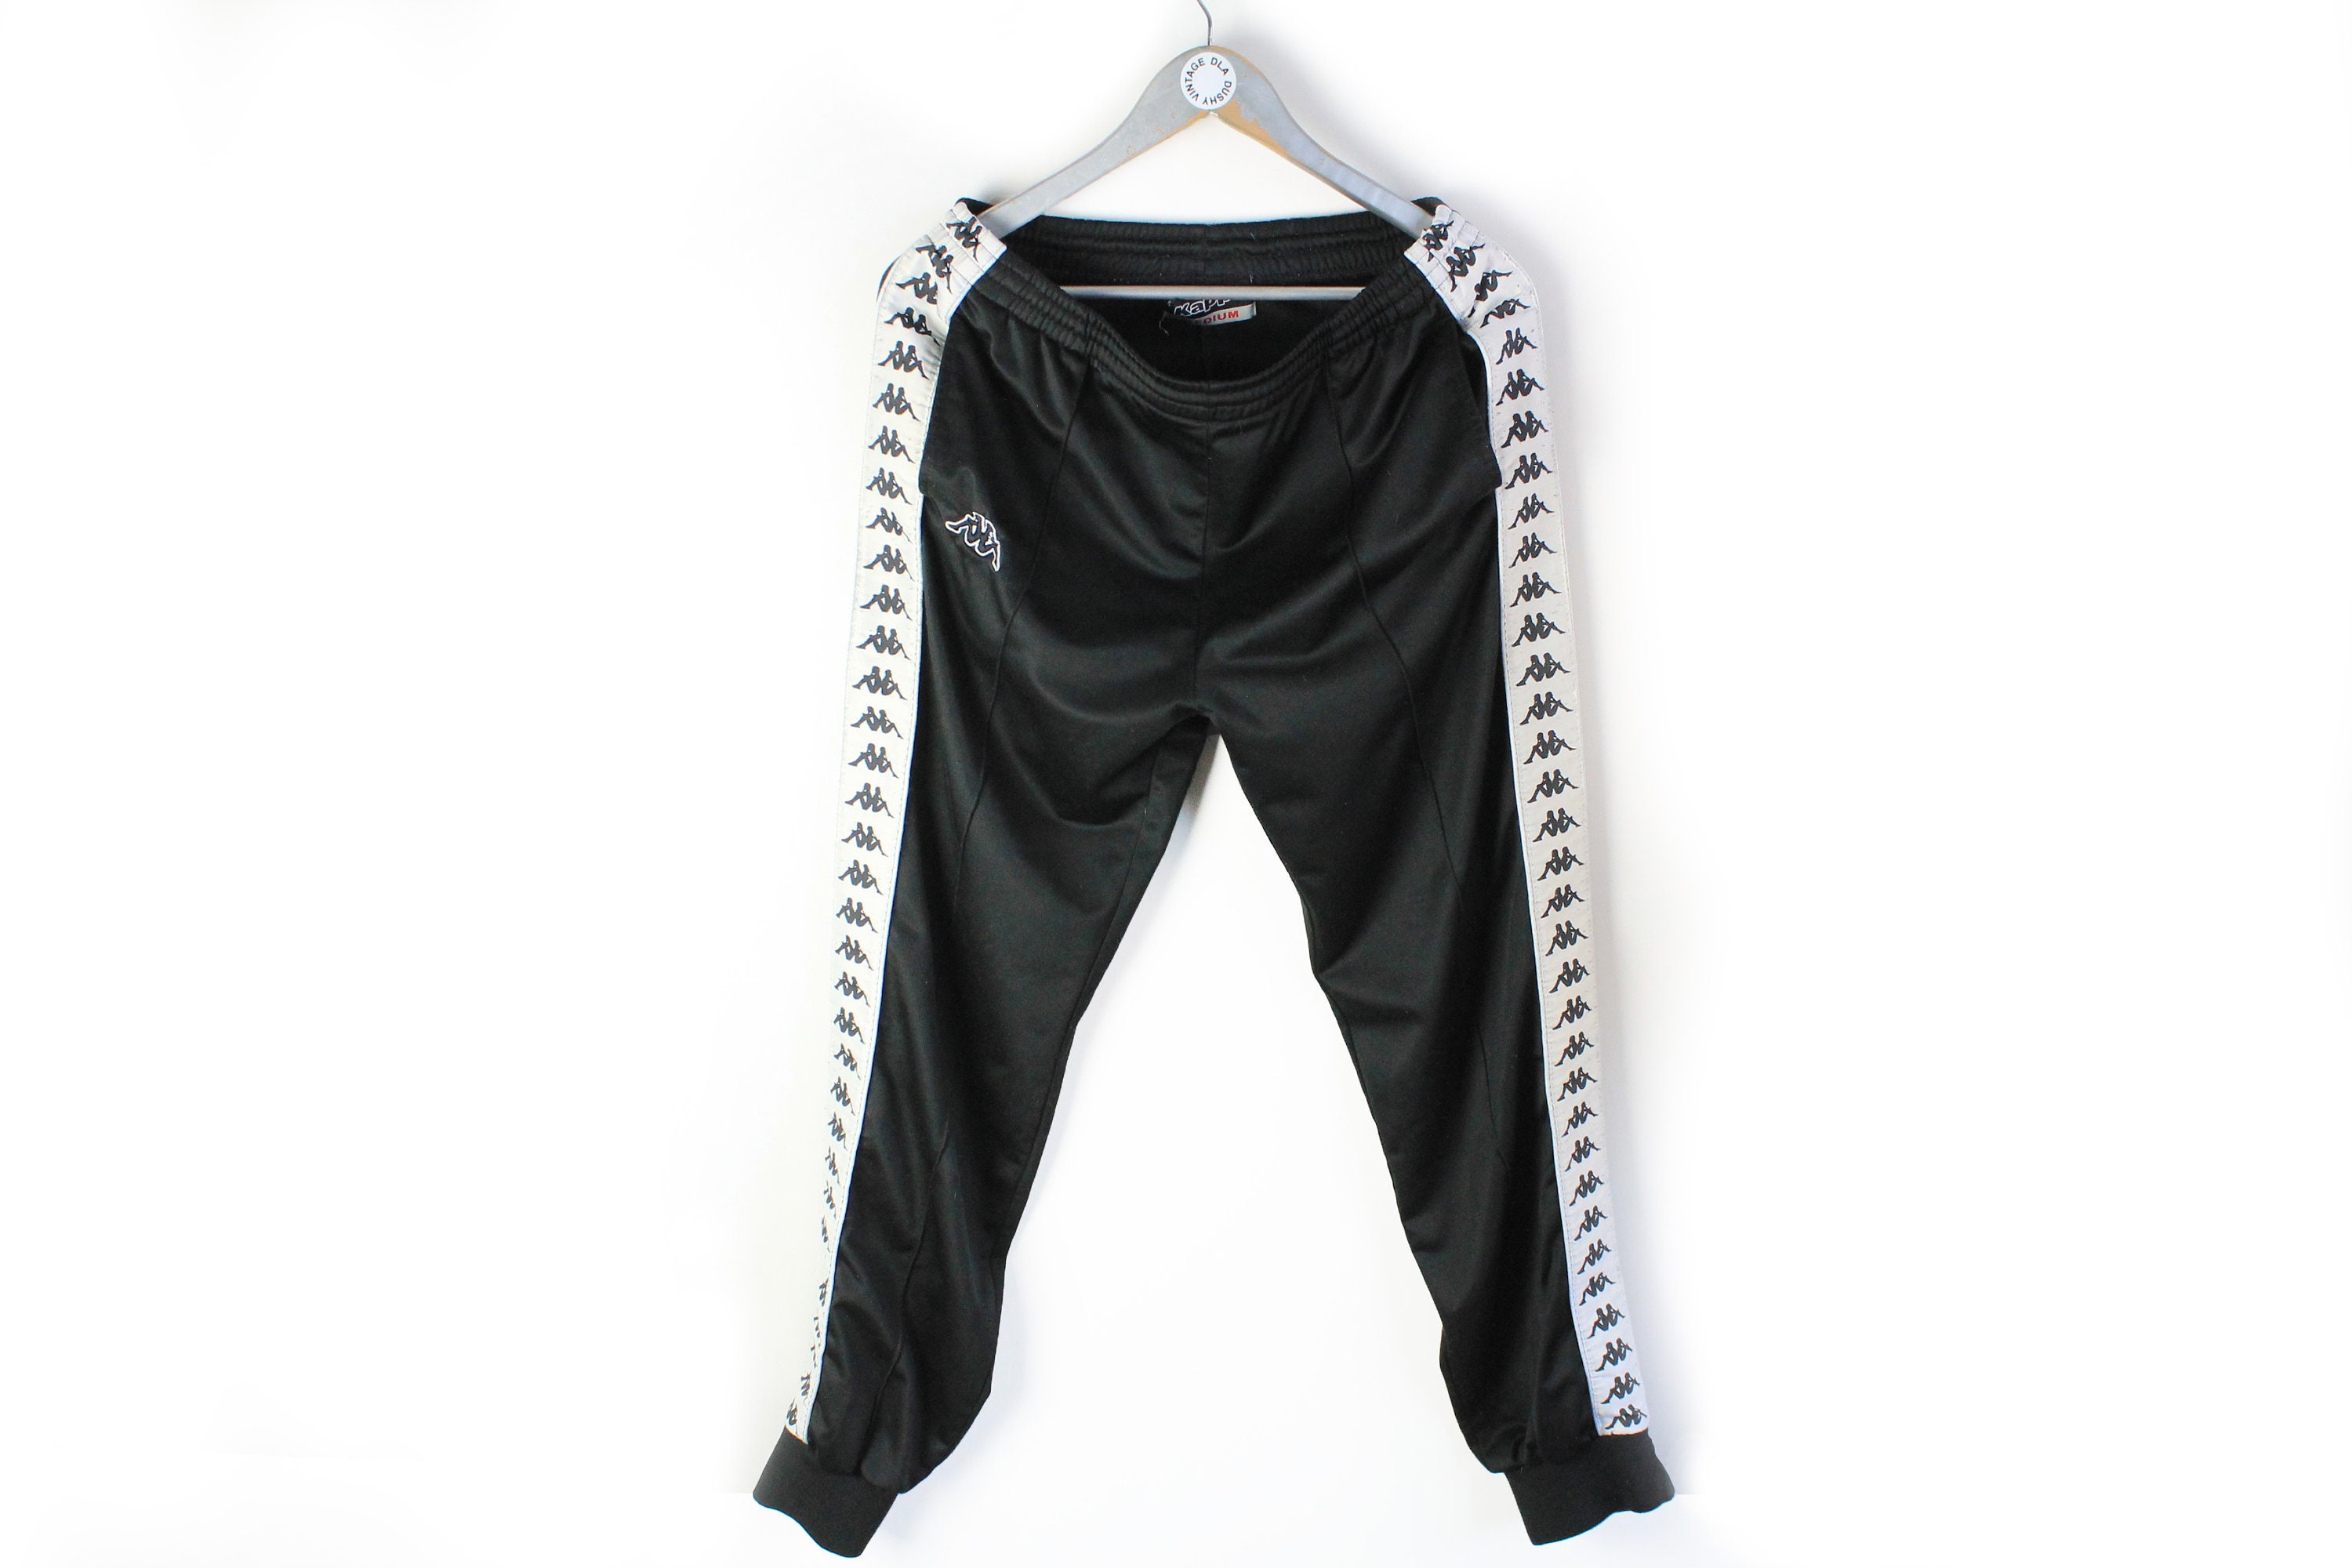 Vintage KAPPA Men's Track Pants Size M Medium Black White Full Strip Logo  Authentic Retro Cuffs Rare Trousers Sport Wear Athletic 90s 80s 